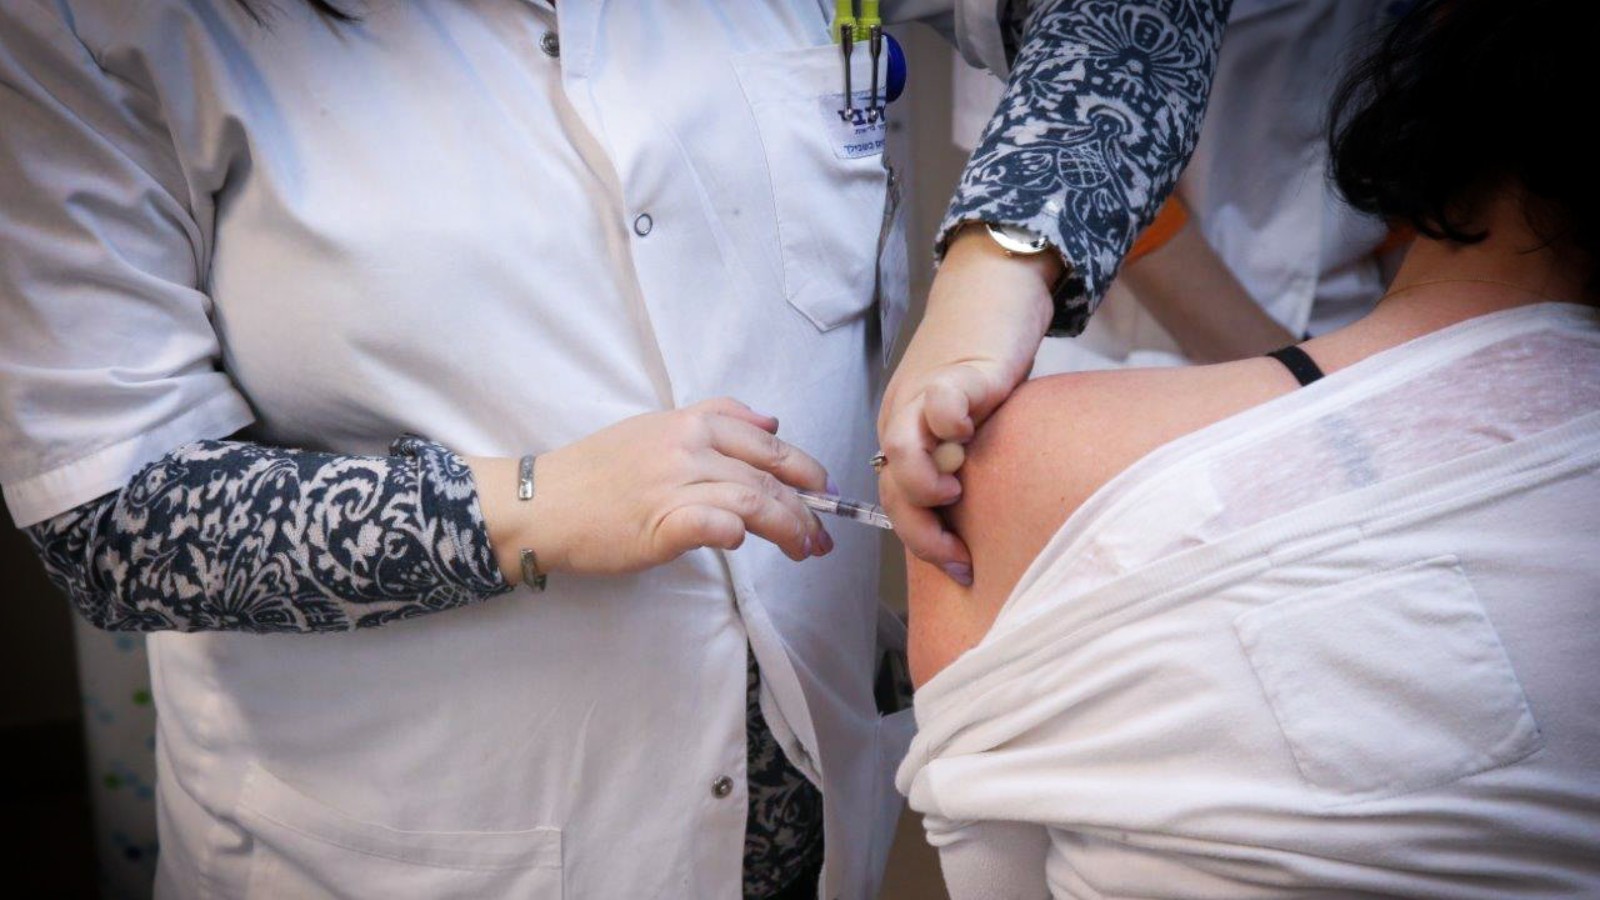 An Israeli woman getting a flu shot. Photo by FLASH90